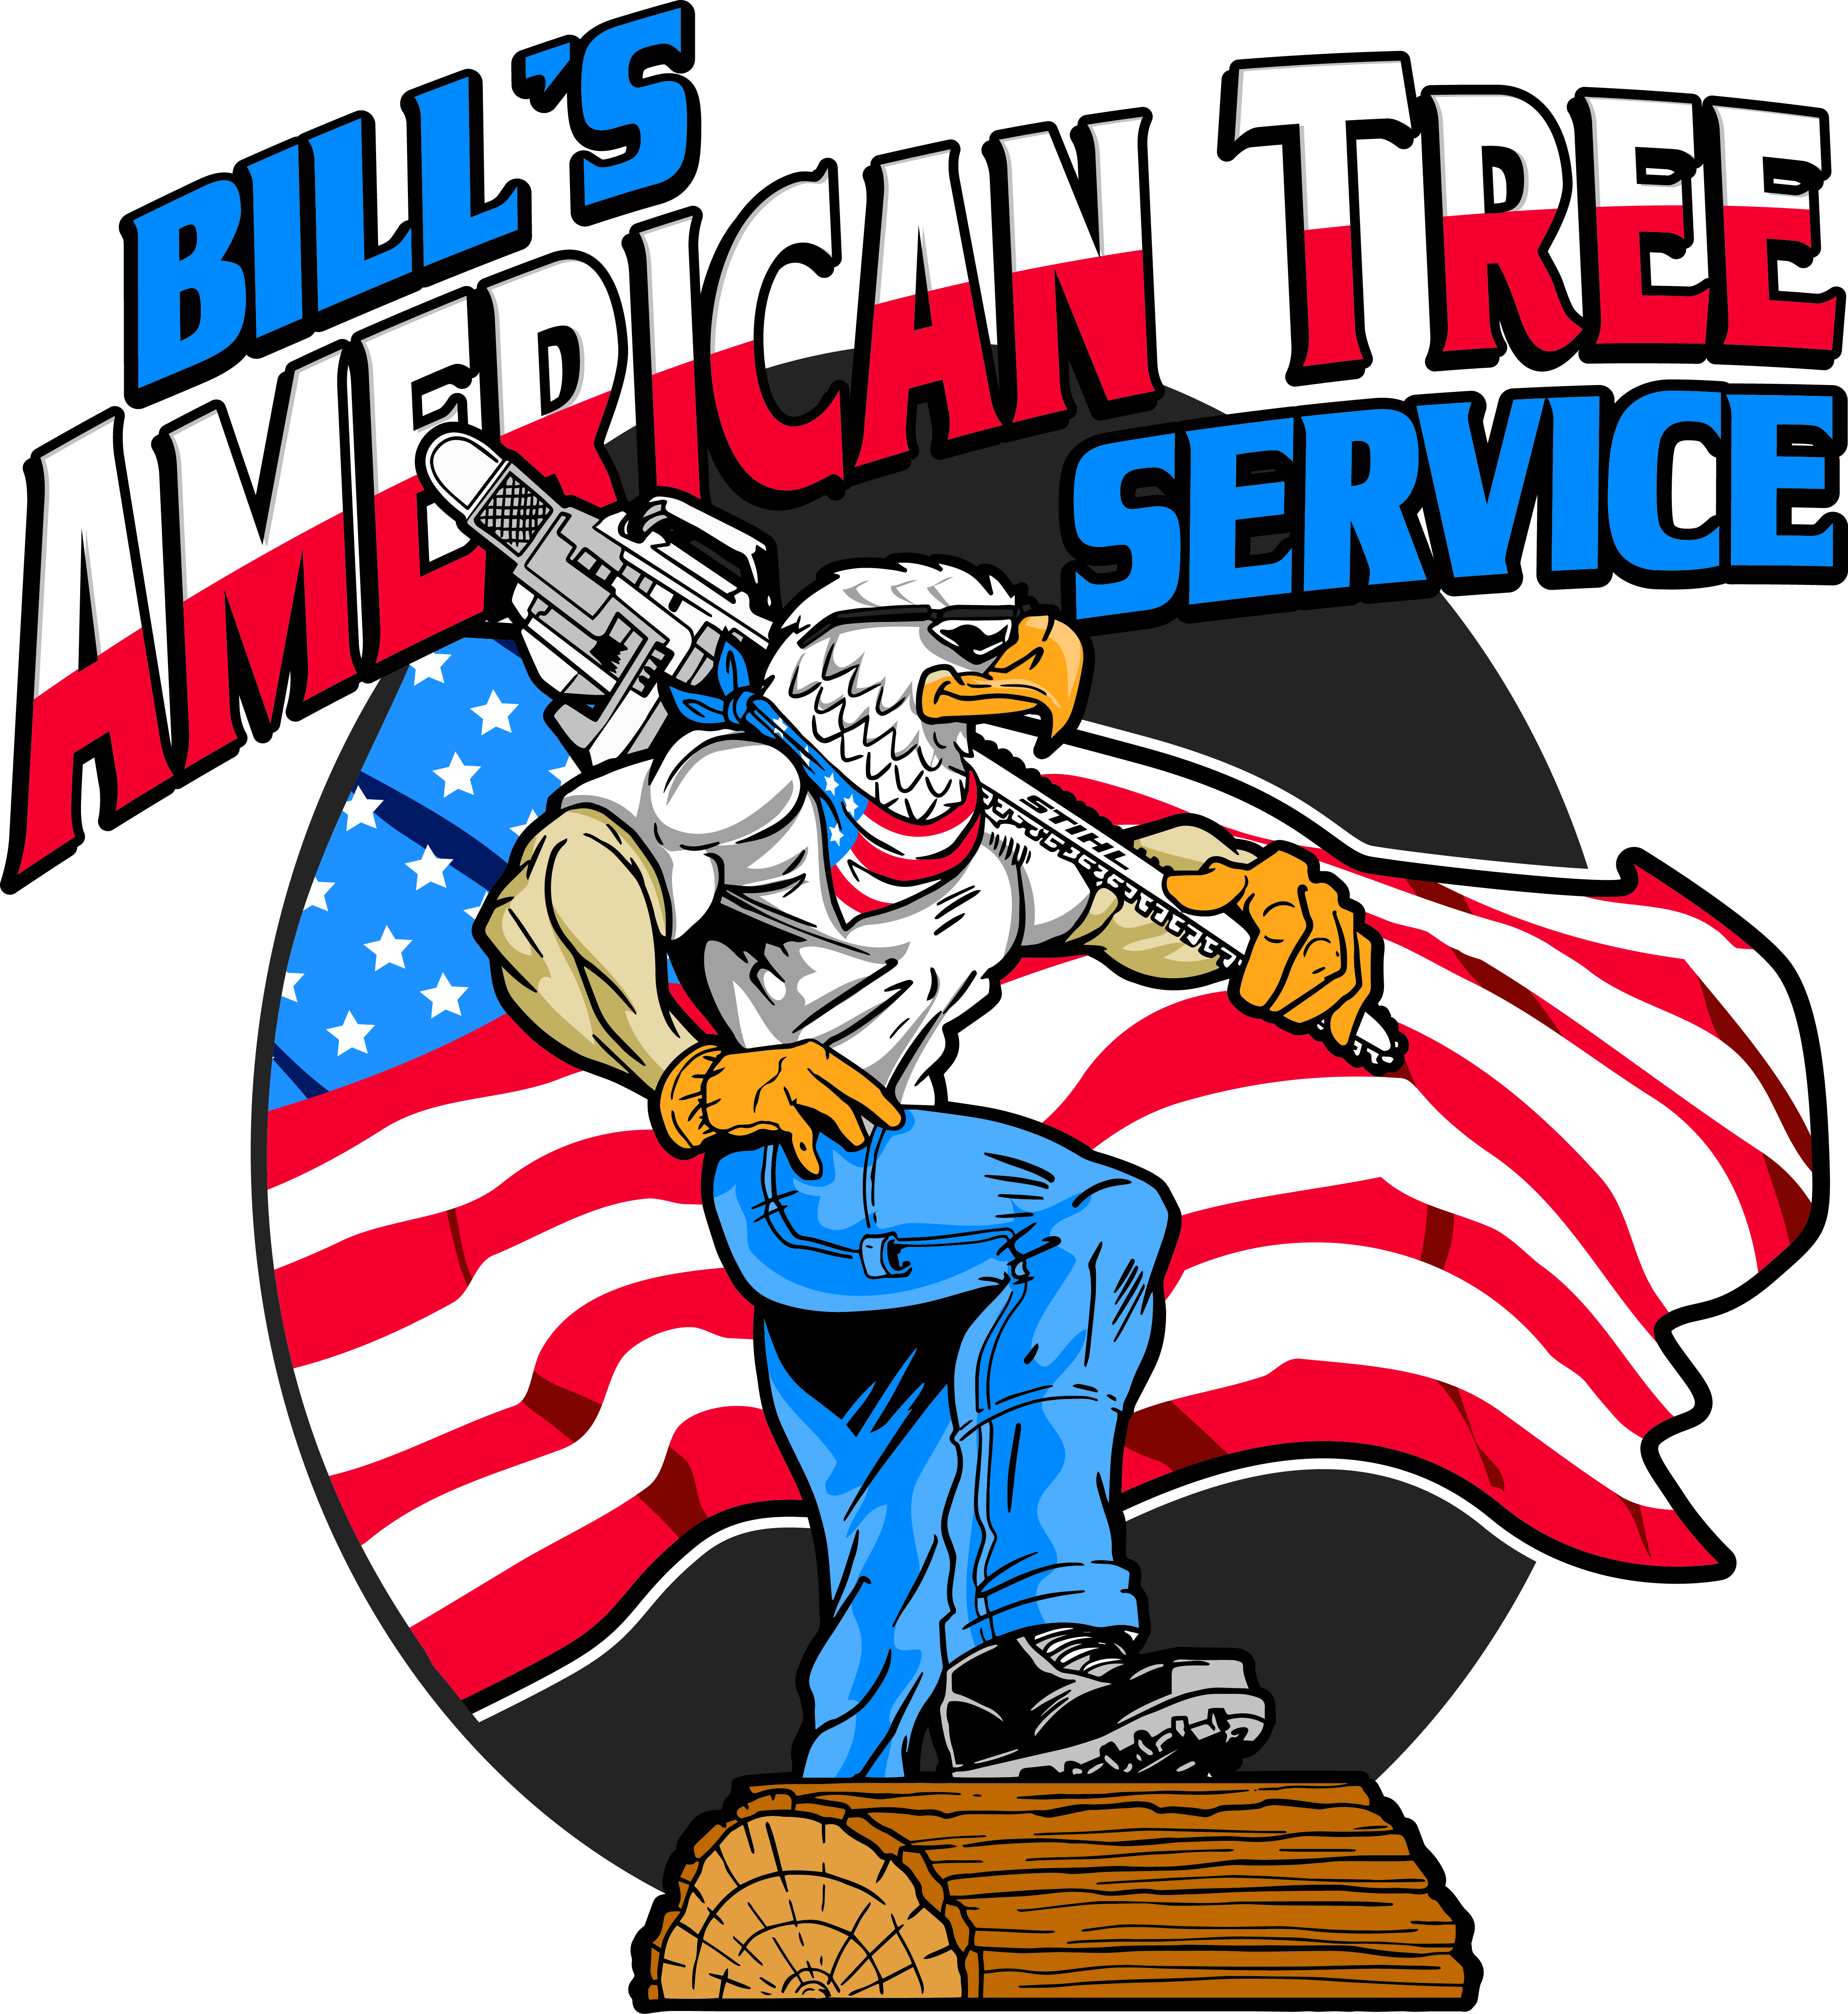 Bill's American Tree Service